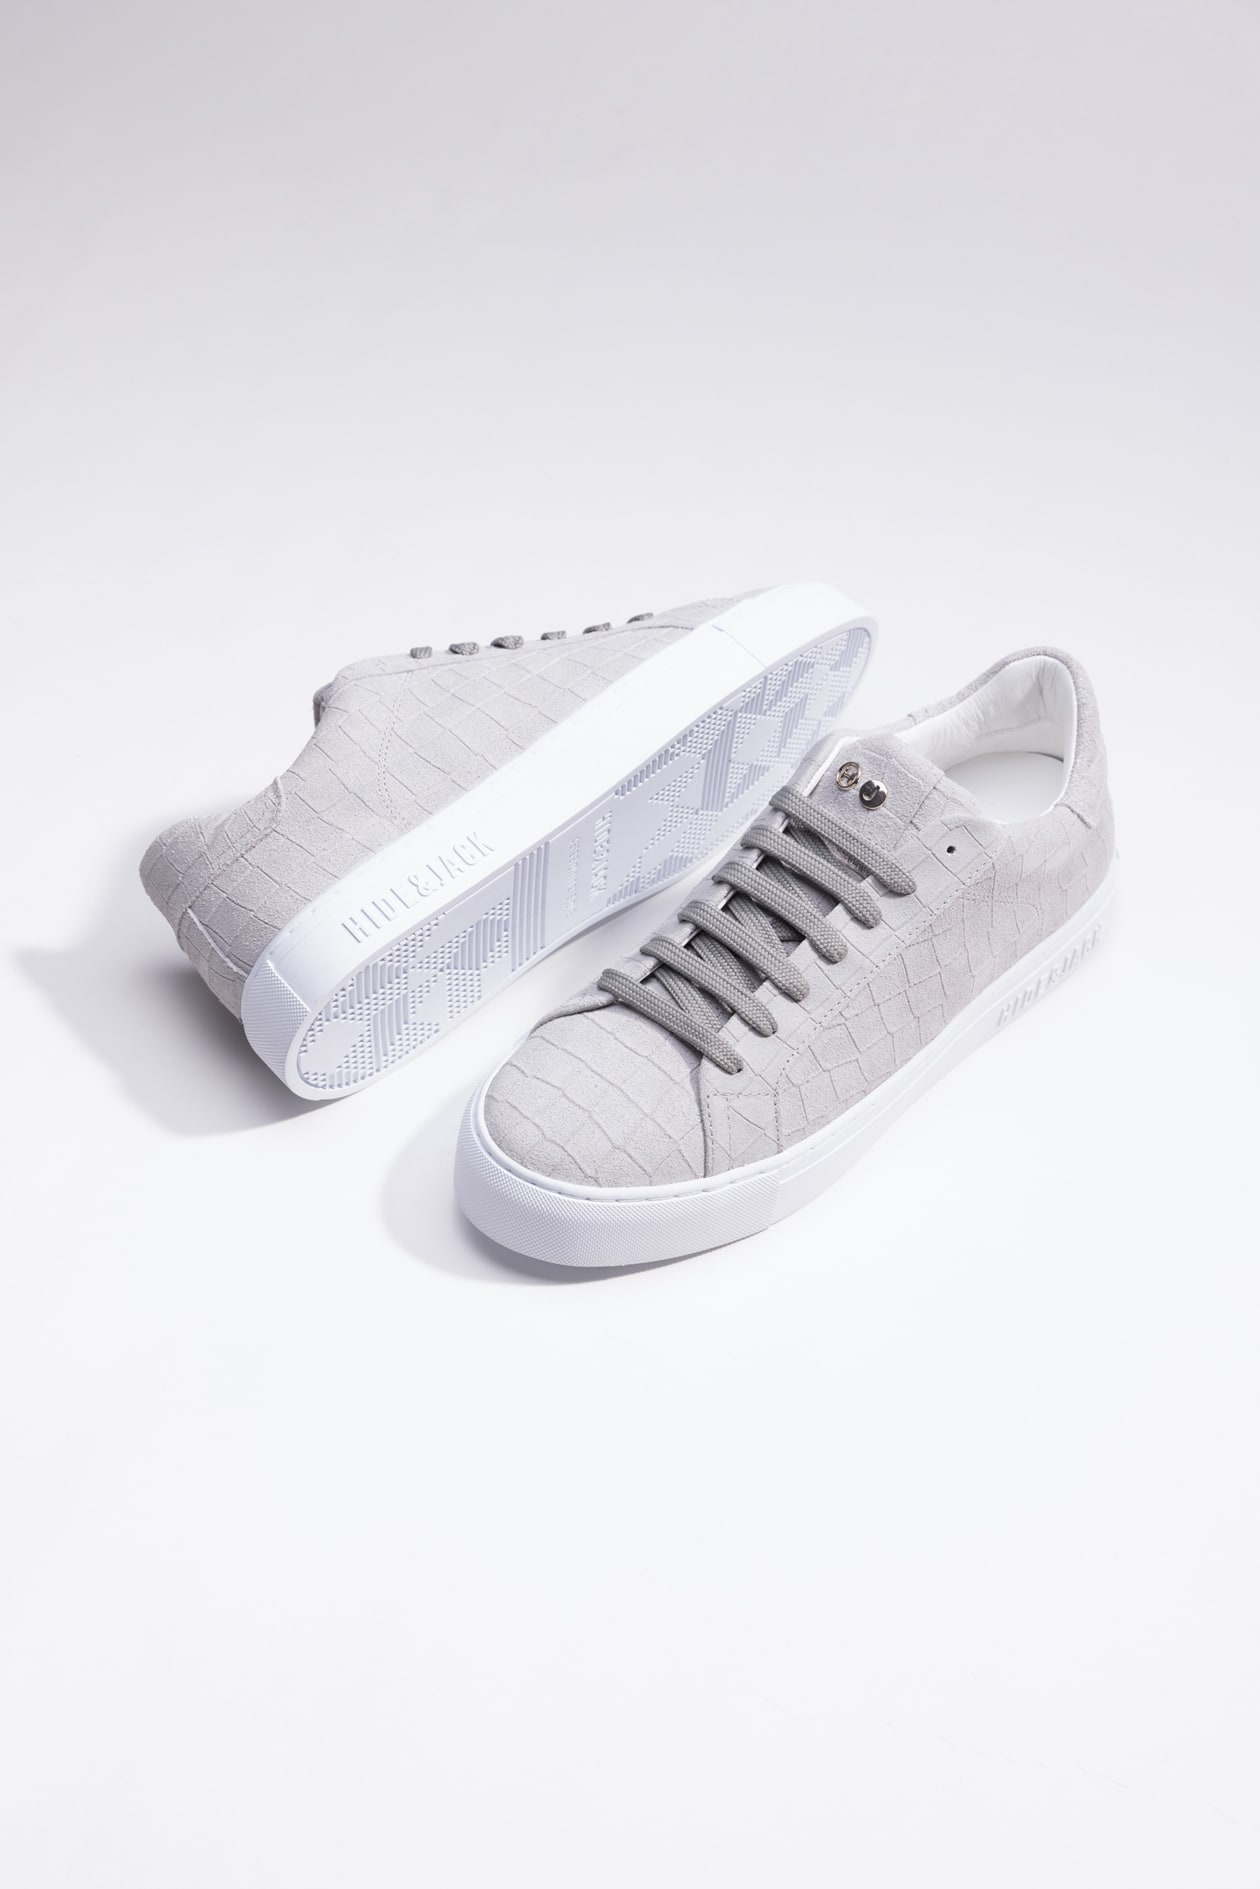 Hide & Jack Low Top Sneaker - Essence Suede Grey